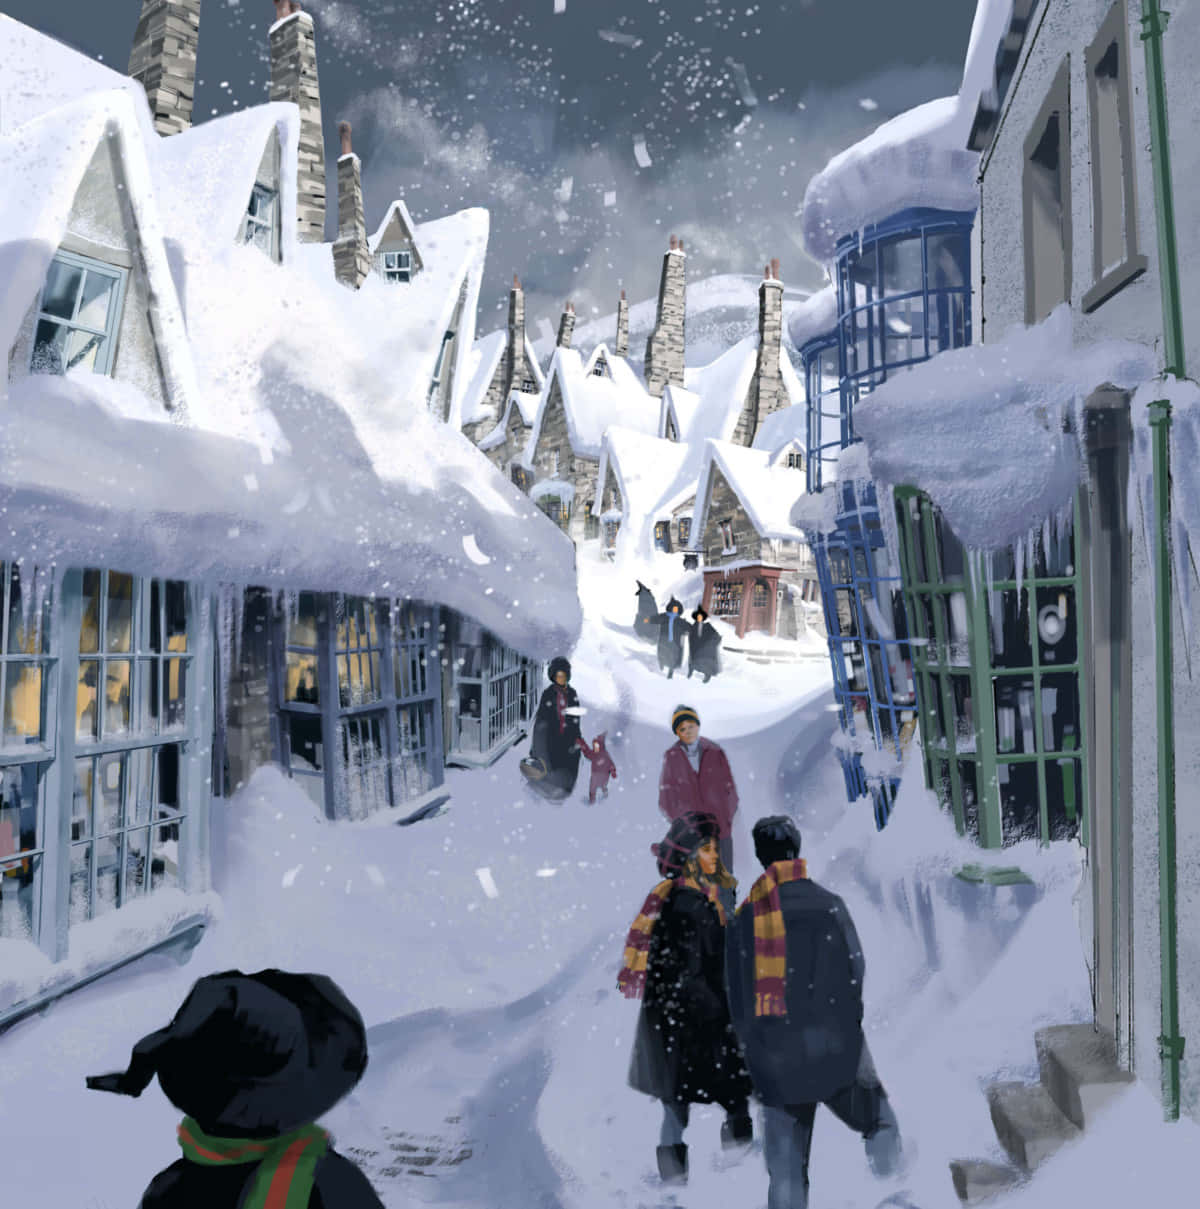 "Celebrate Christmas Like a Wizard at Hogwarts" Wallpaper